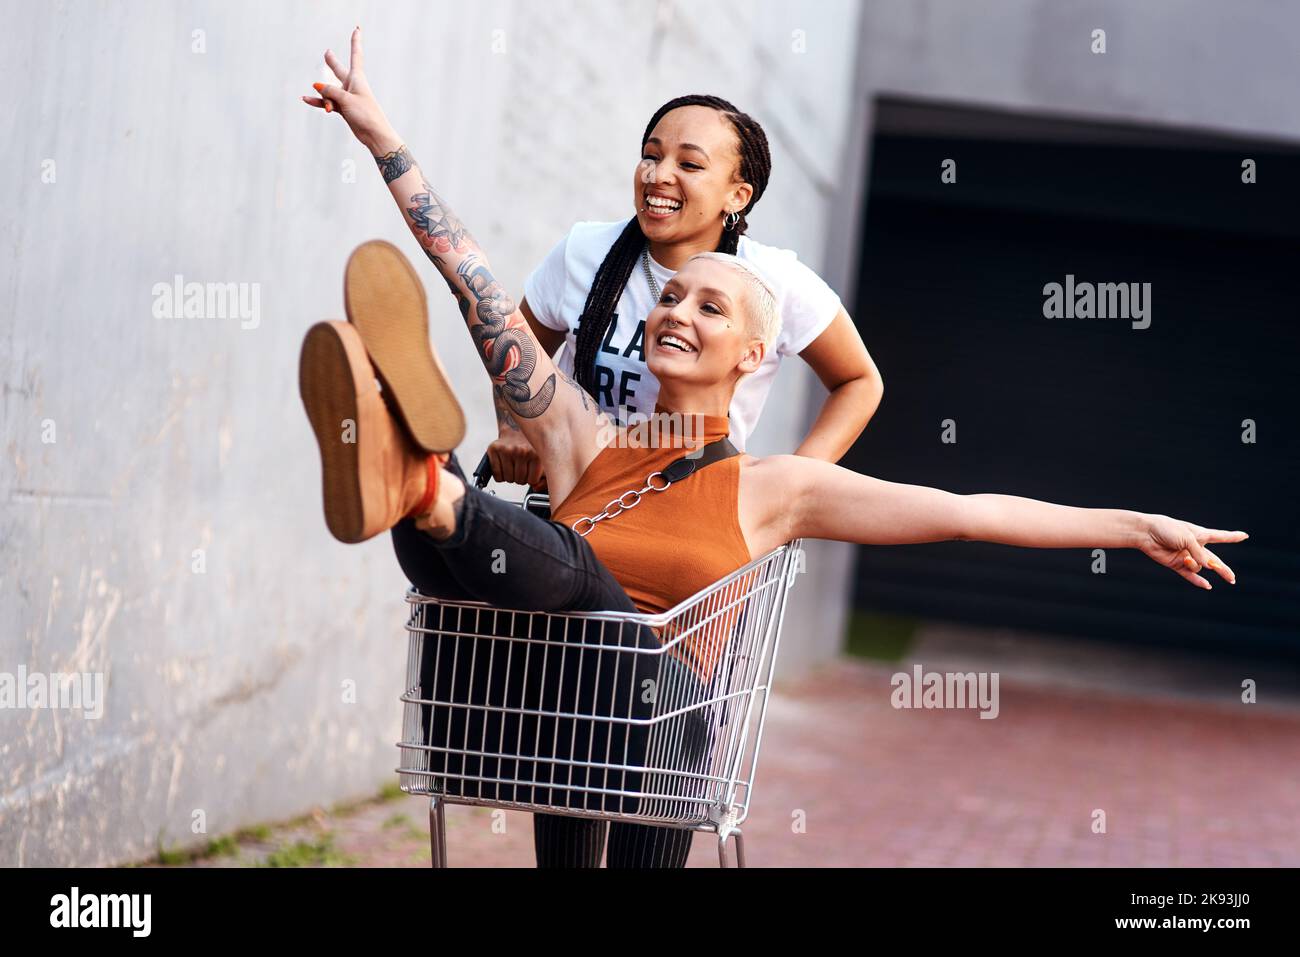 Im having good fun. an energetic young woman pushing her female friend in a shopping cart outdoors. Stock Photo